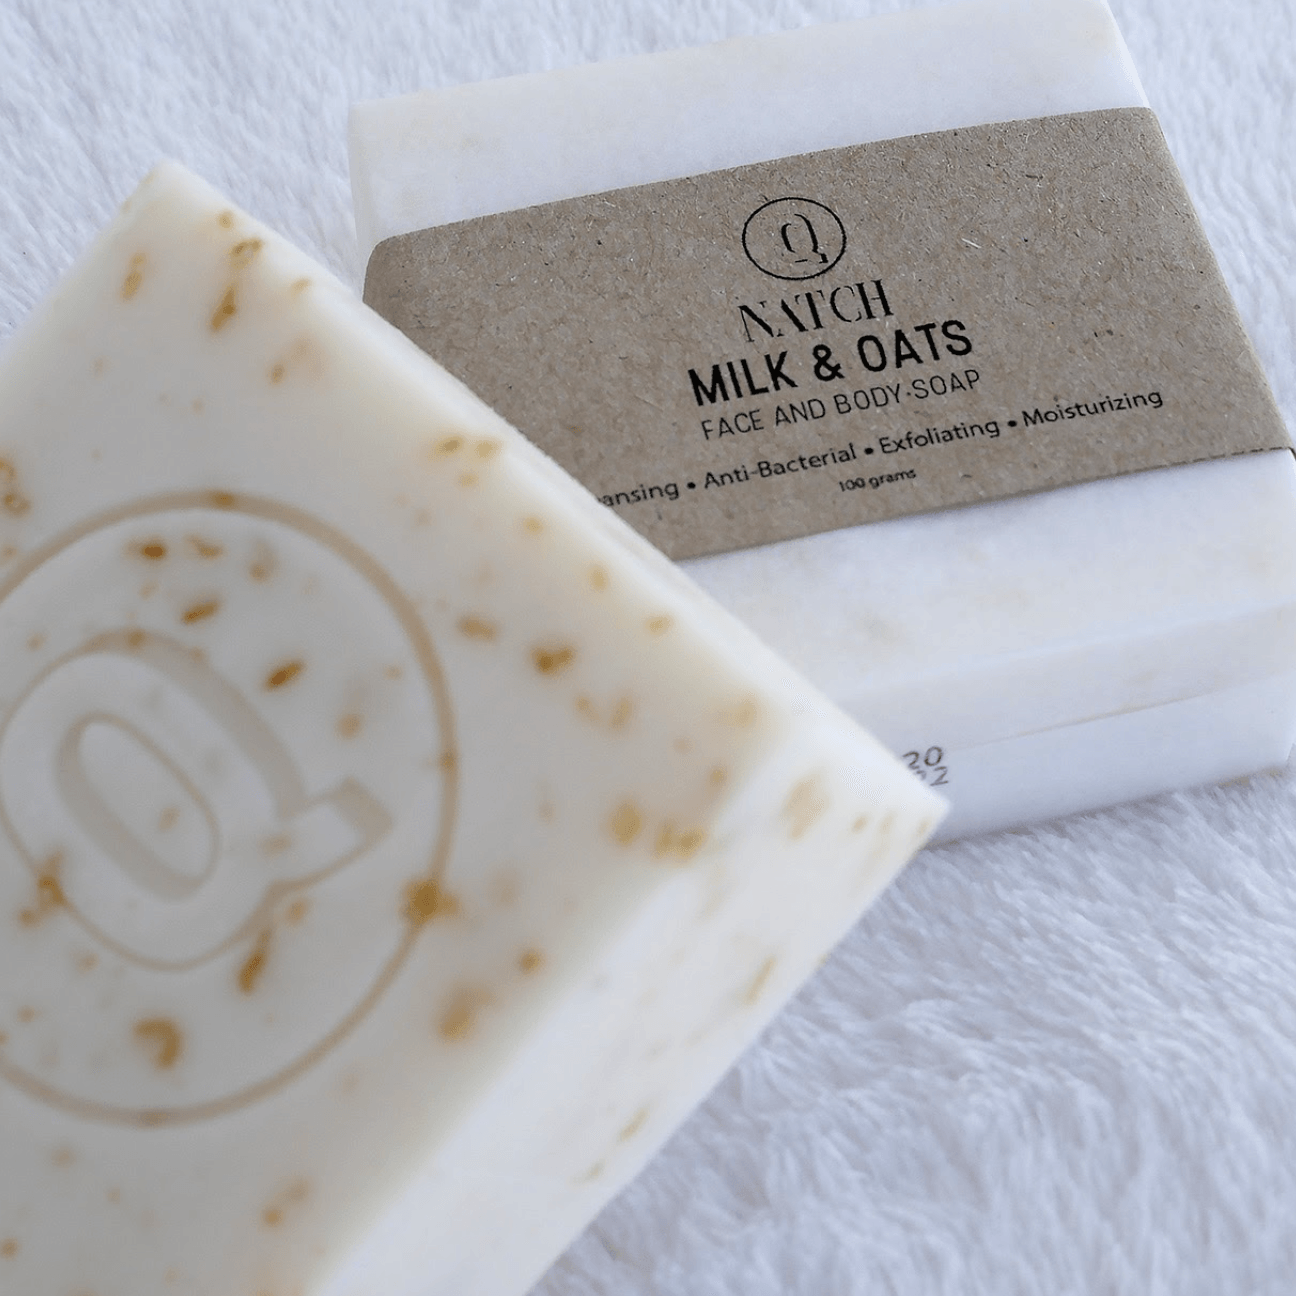 Natch Milk and Oats Face and Body Soap-Qraye Beauty-Simula PH